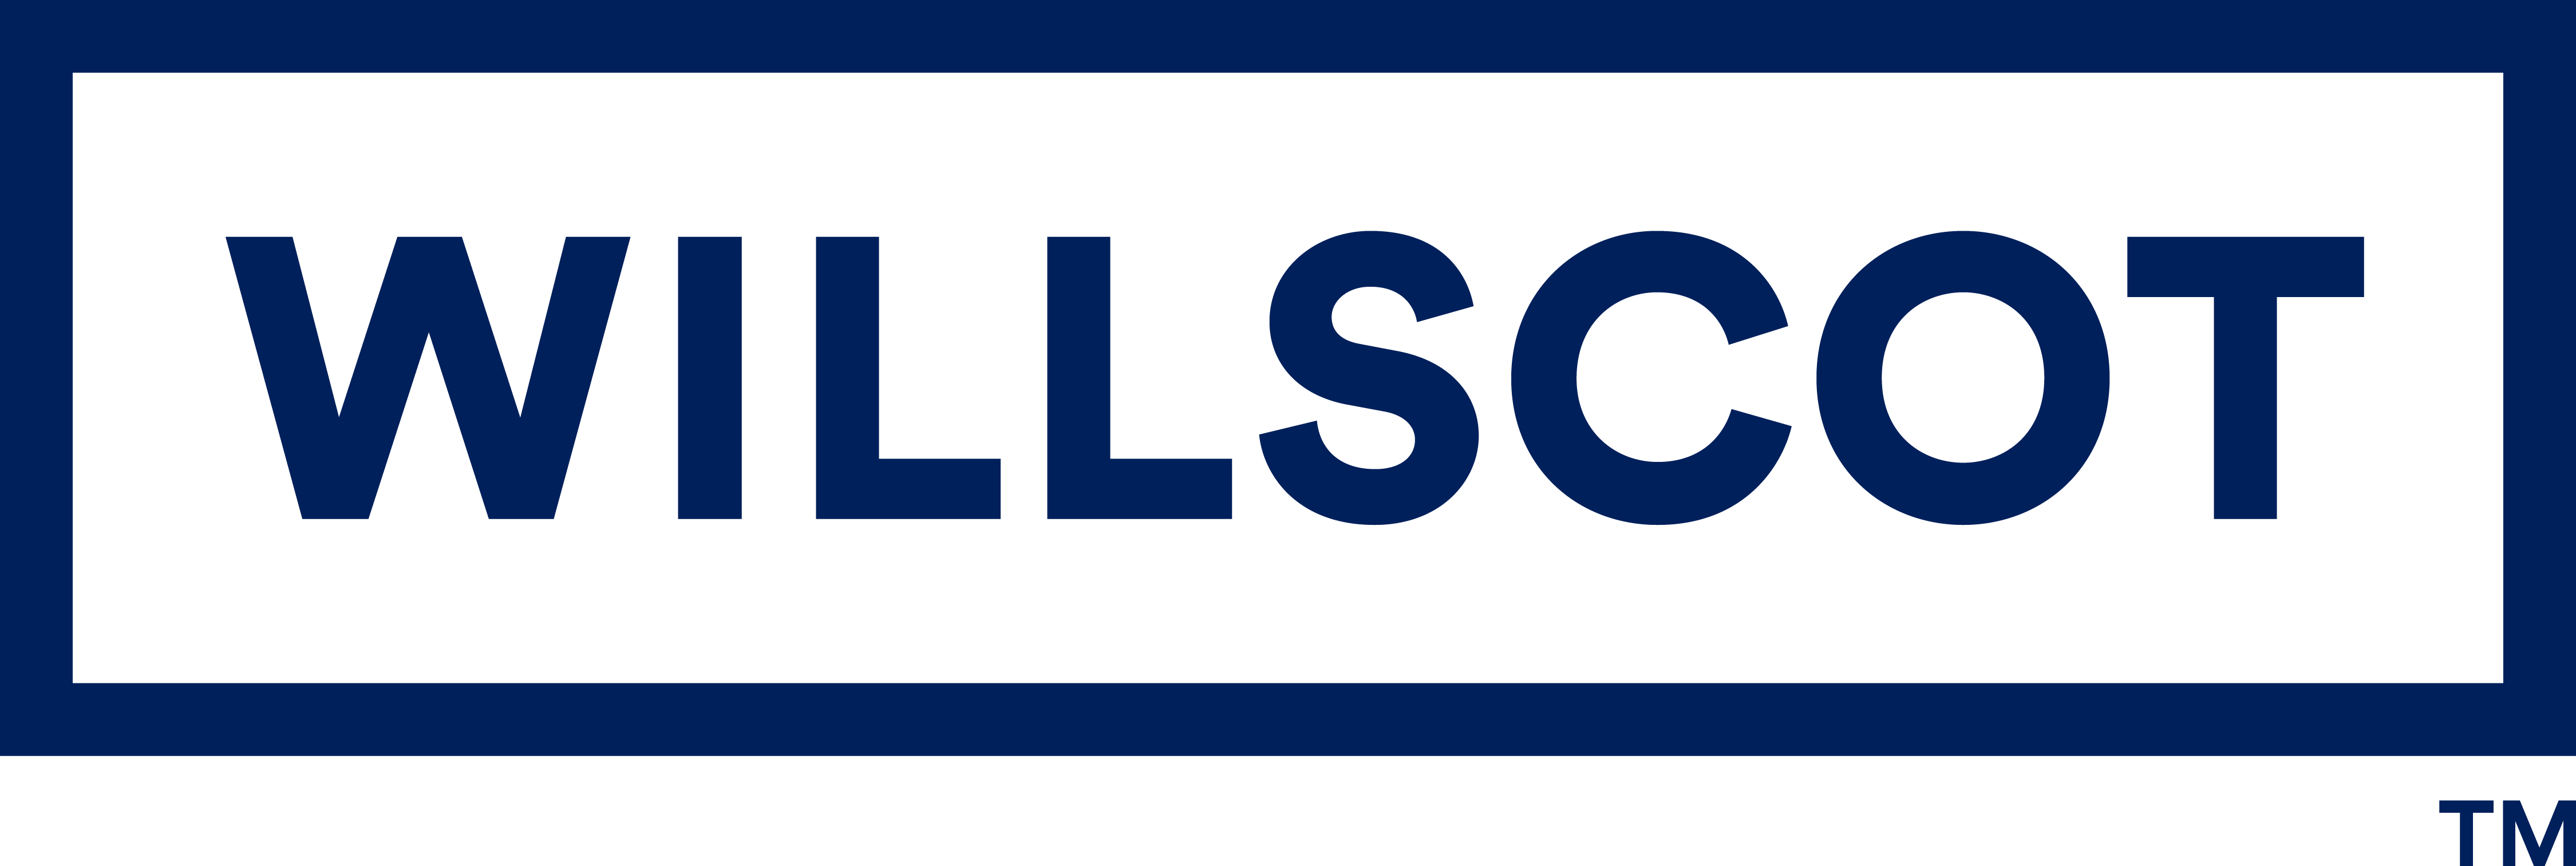 WillScot logo